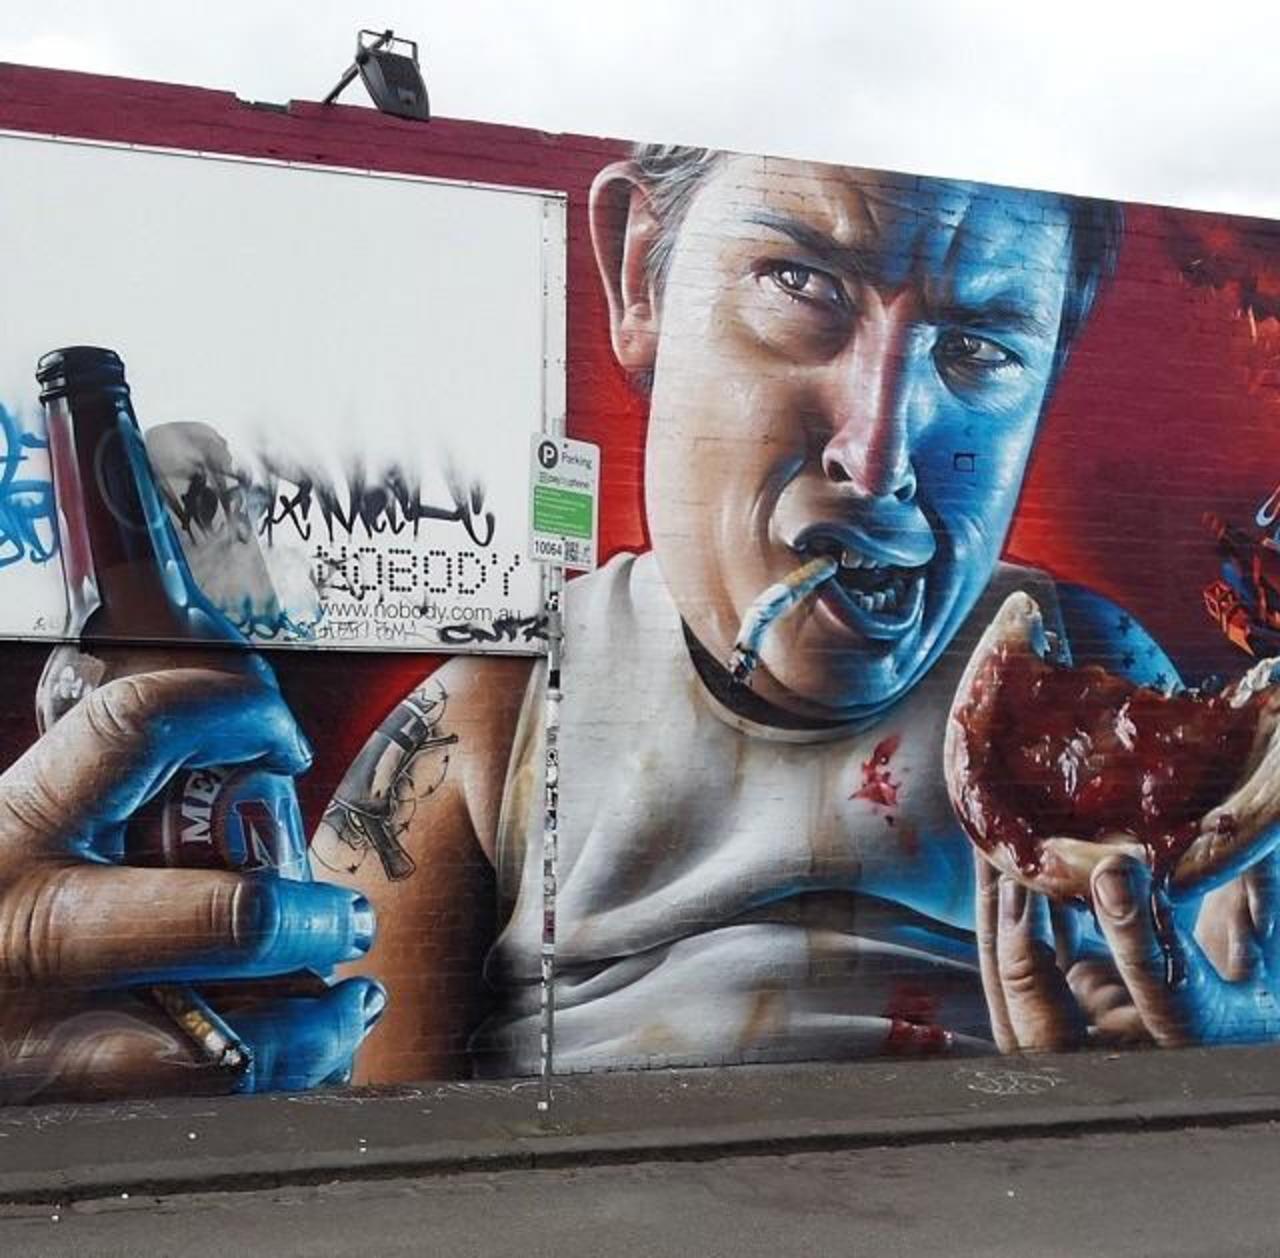 Smug One x Sofles x Adnate hyperrealistic Street Art colab located in Melbourne #art #mural #graffiti #streetart http://t.co/h0rwRw3ym3